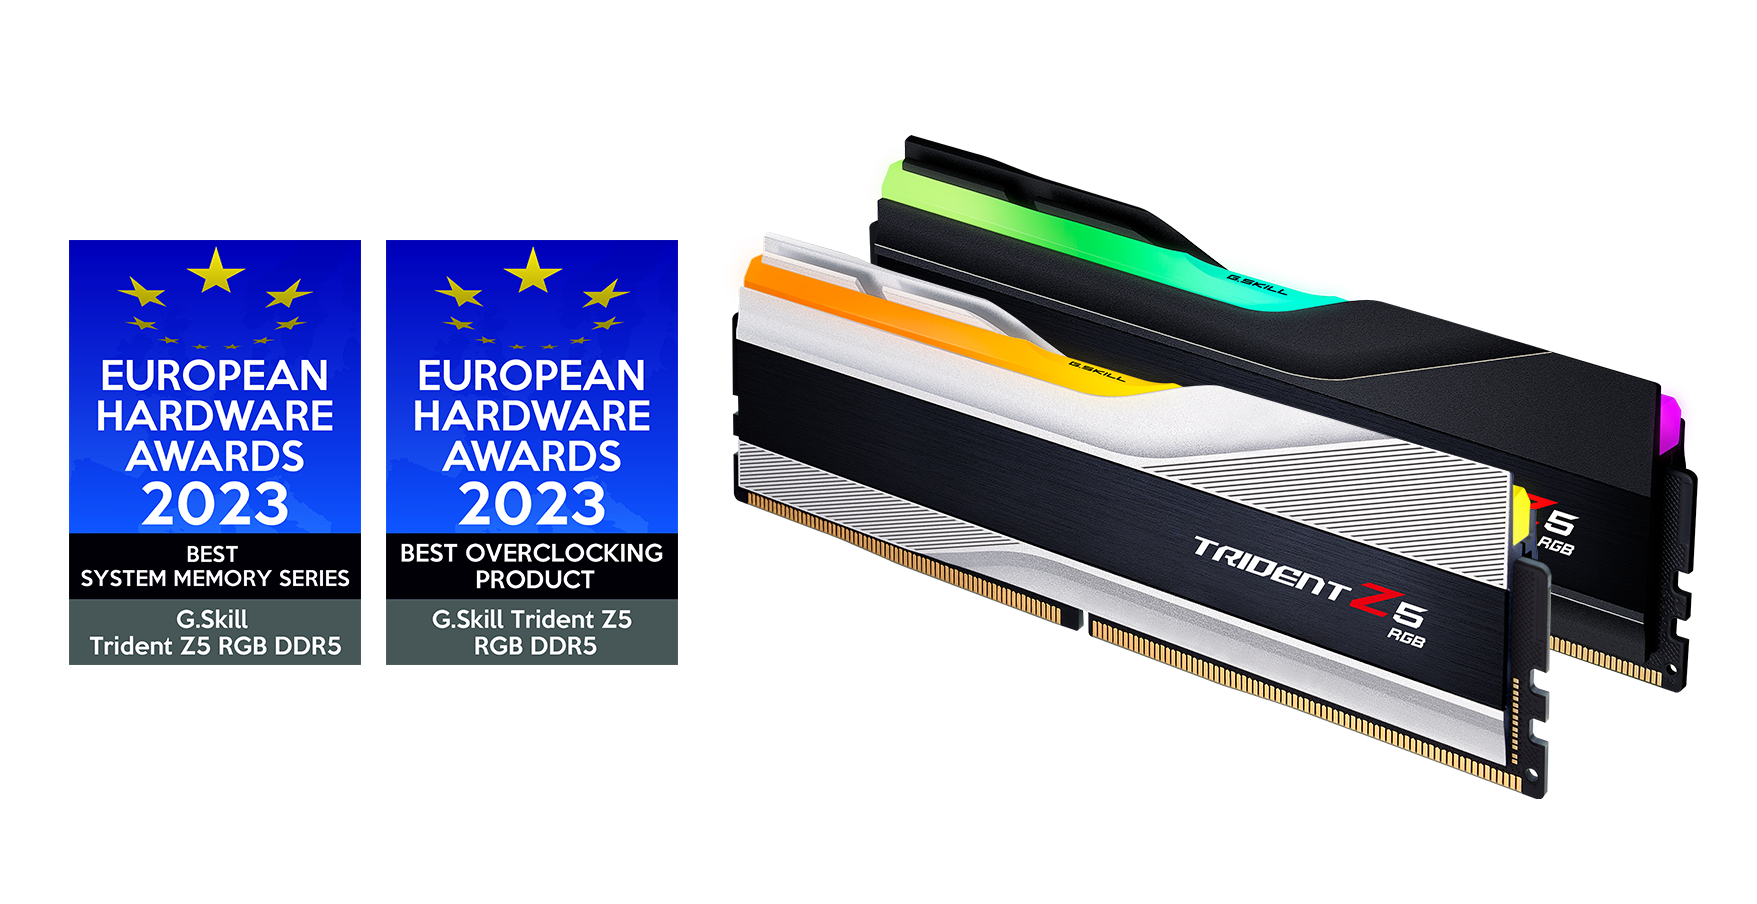 G.SKILL European Hardware Awards 2023 